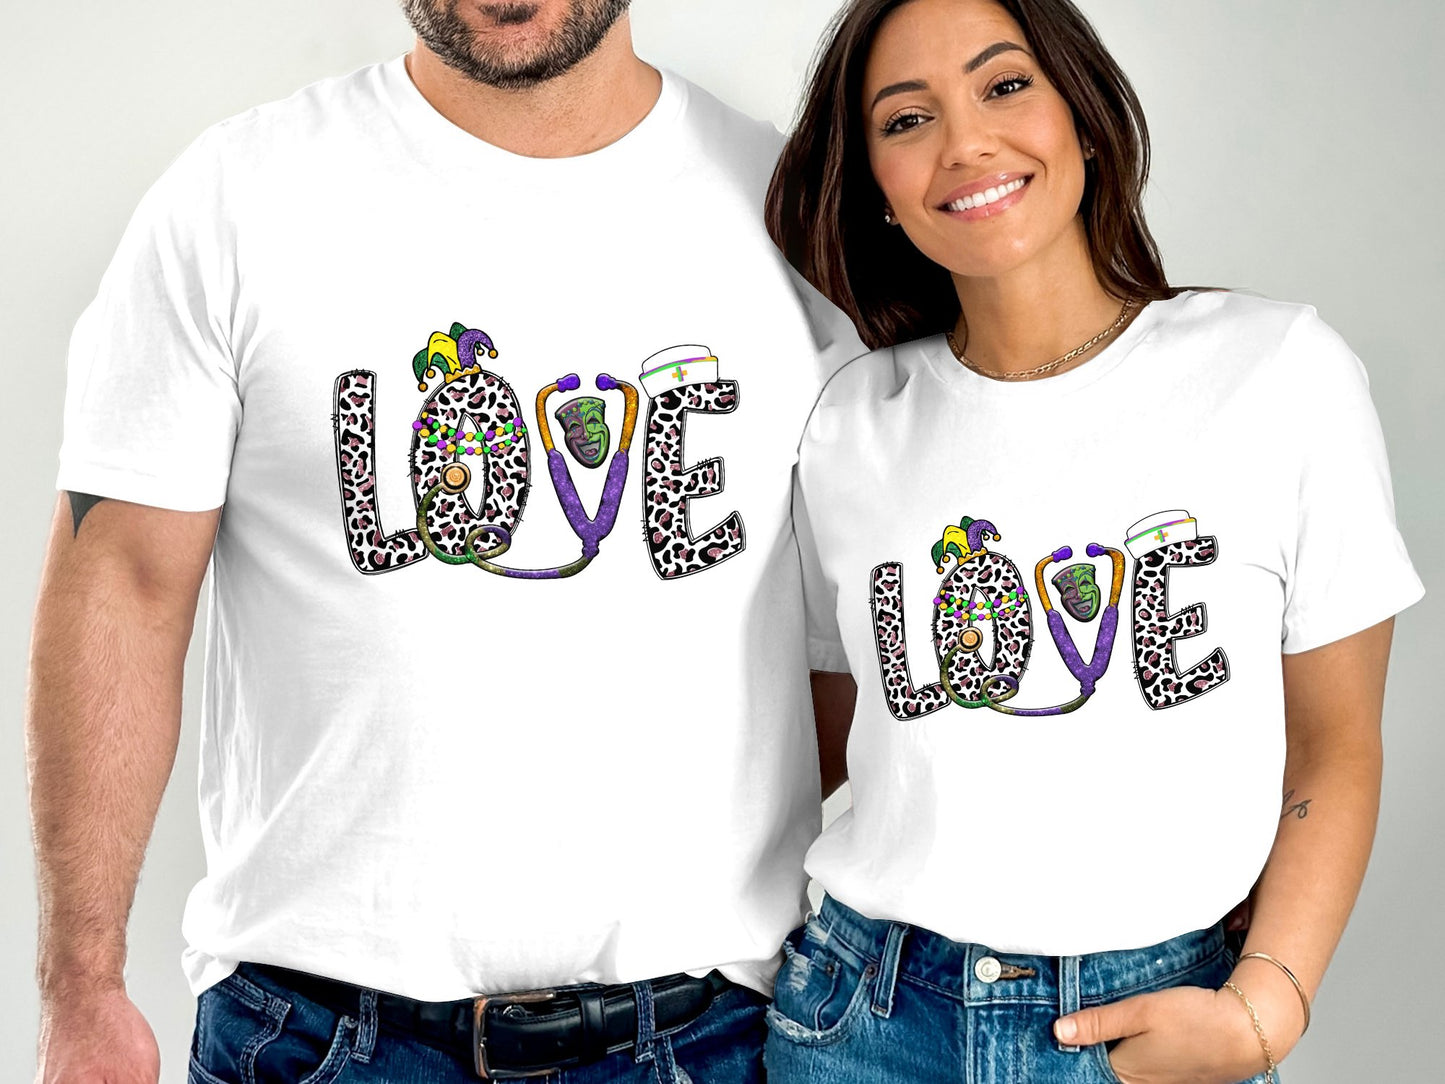 Love Madi-Gras T-shirt